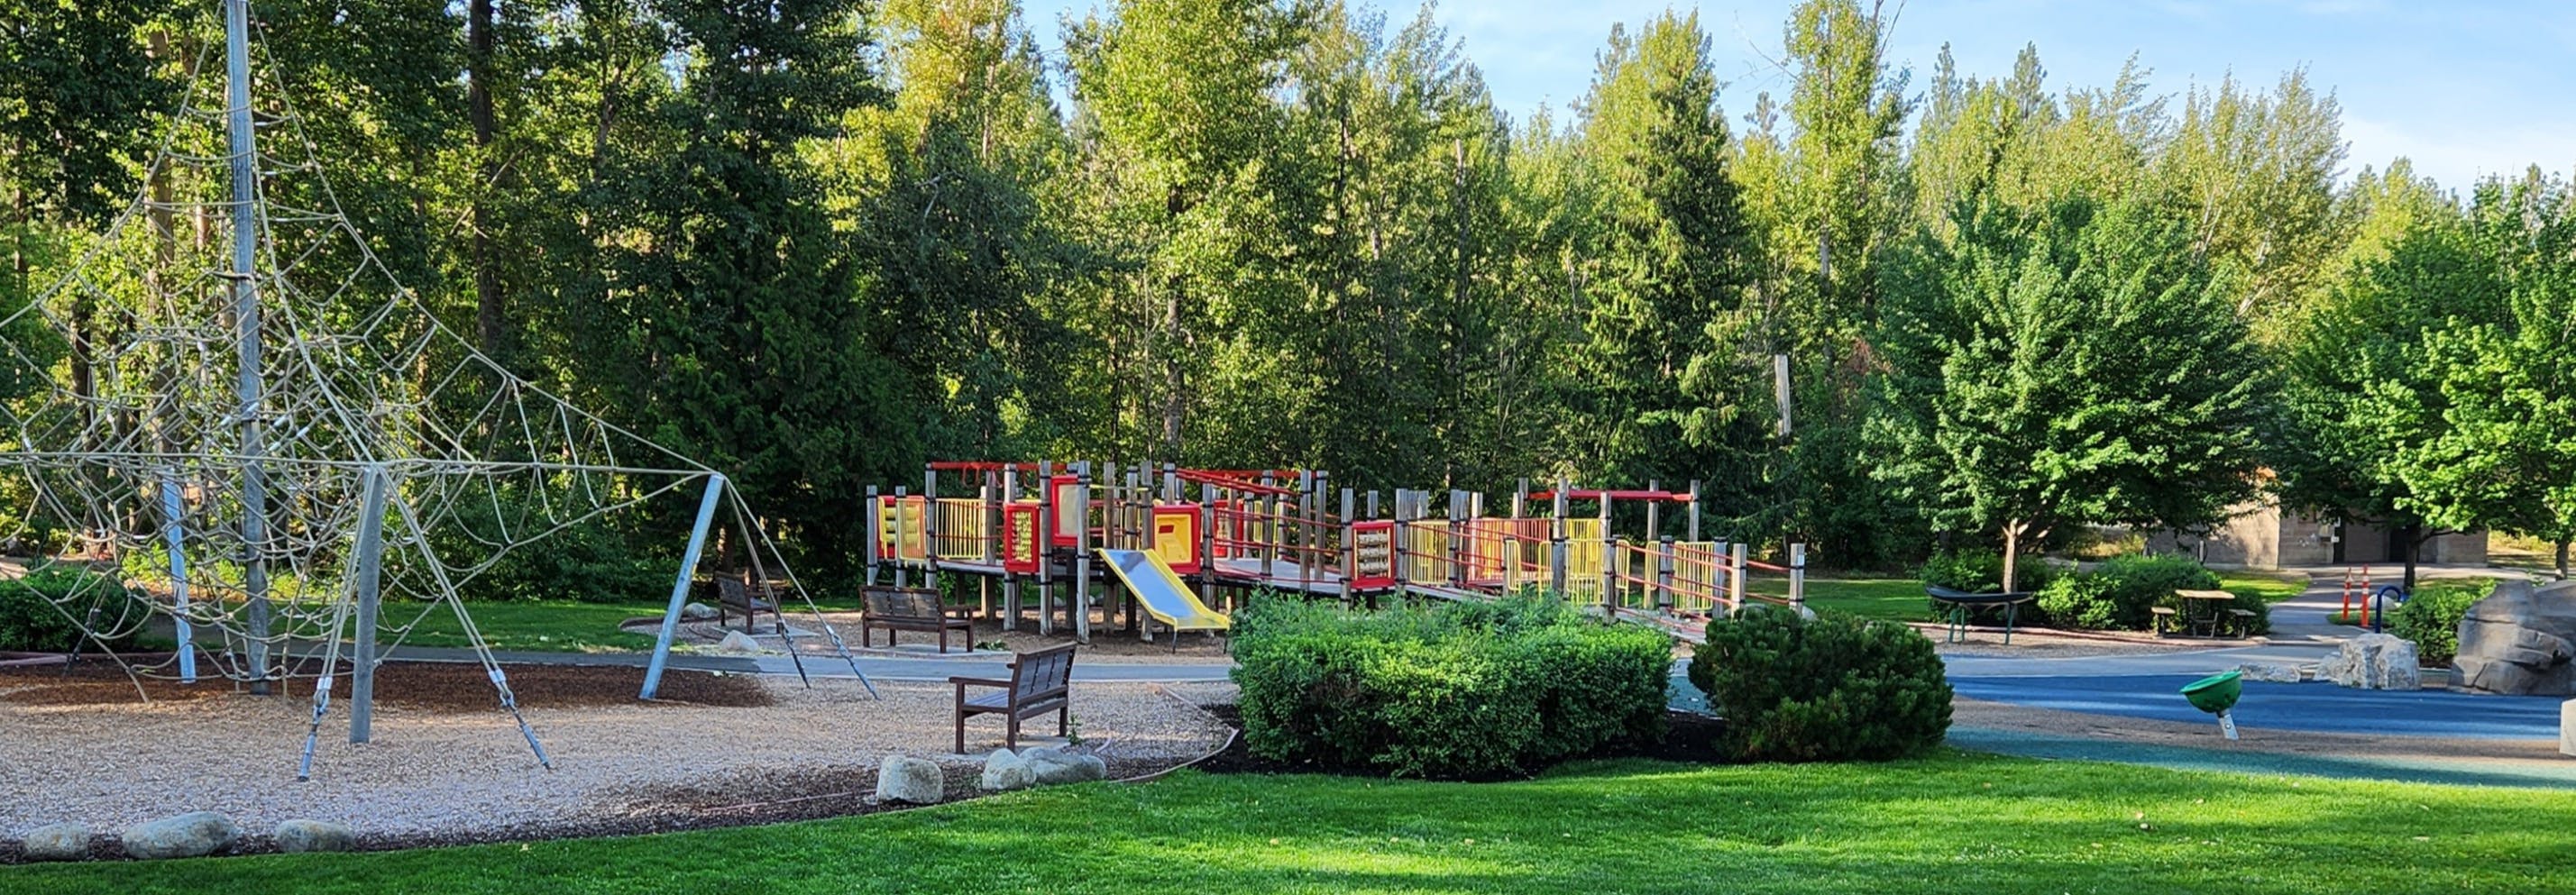 Playground at Mission Creek Regional Park